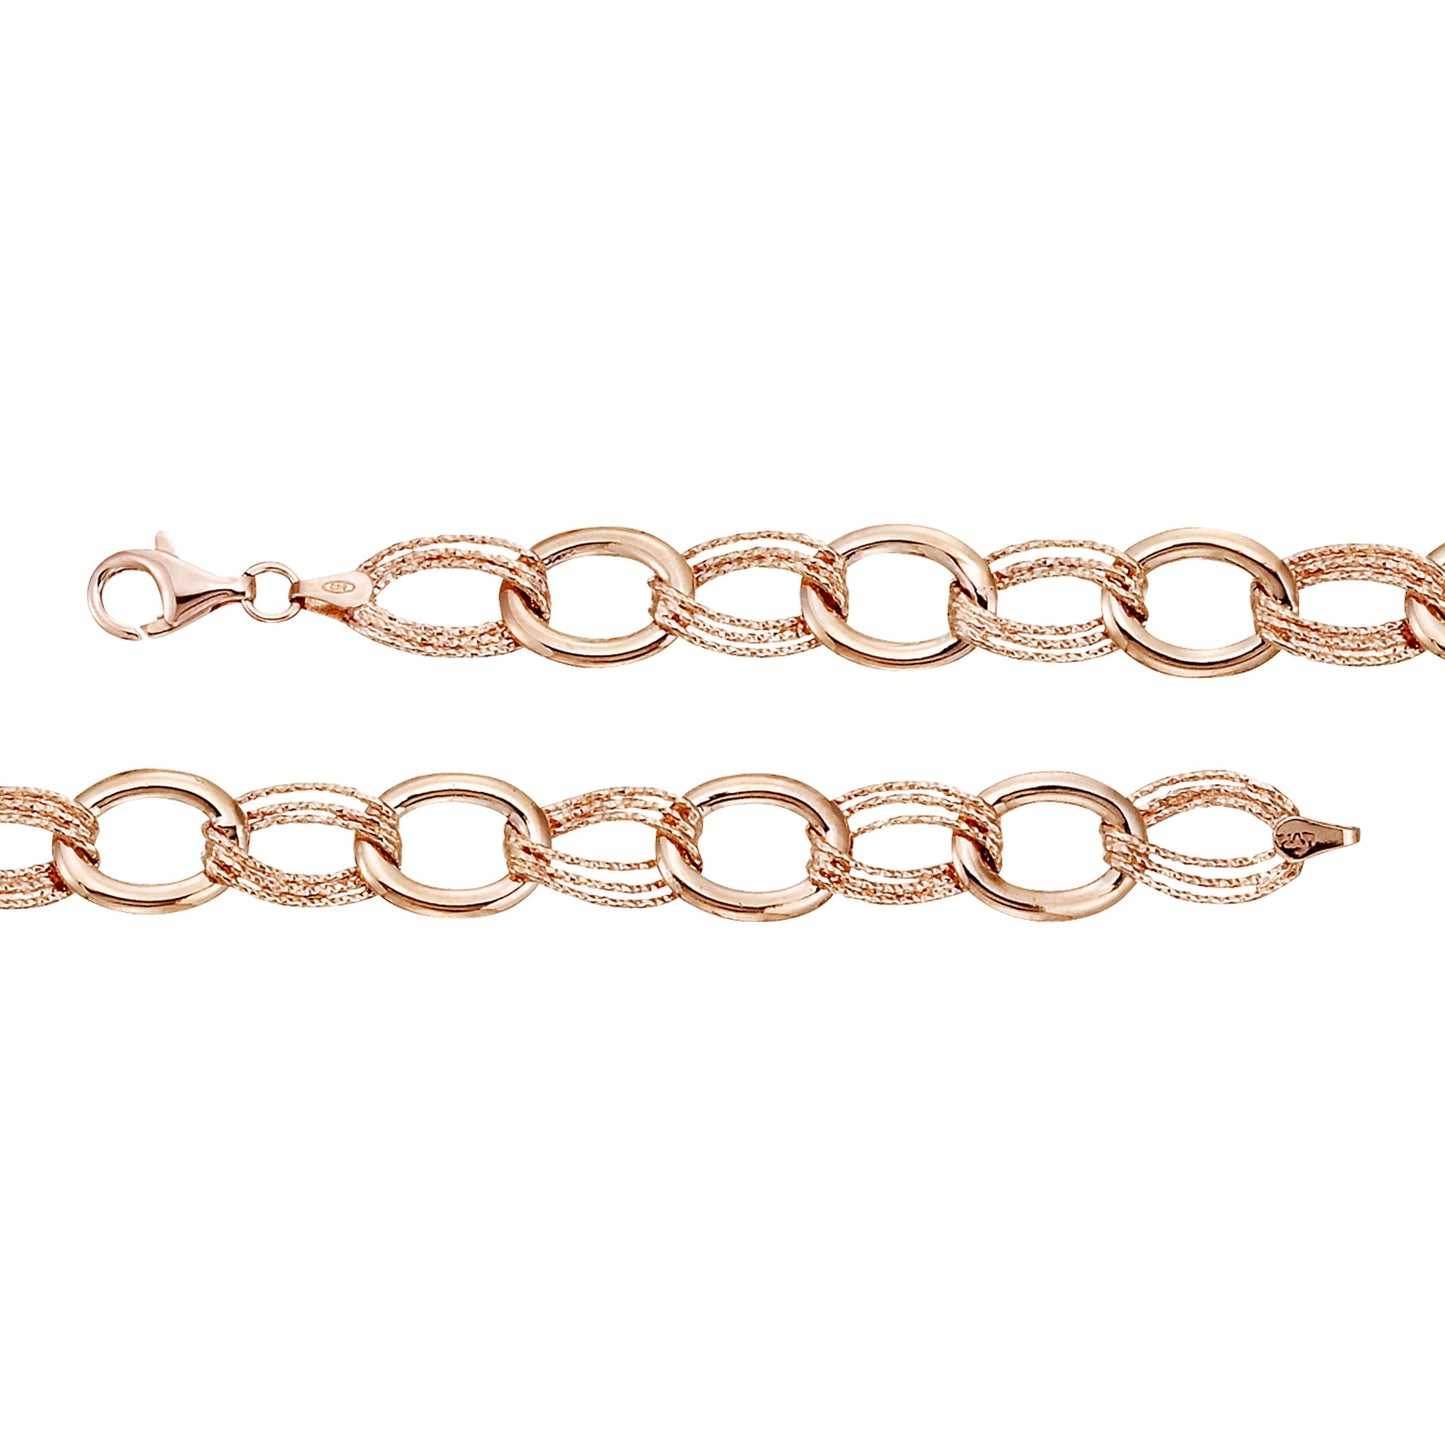 Franco Stellari Italian Sterling Silver Rose Gold Alternating Link Bracelet, 7.5"